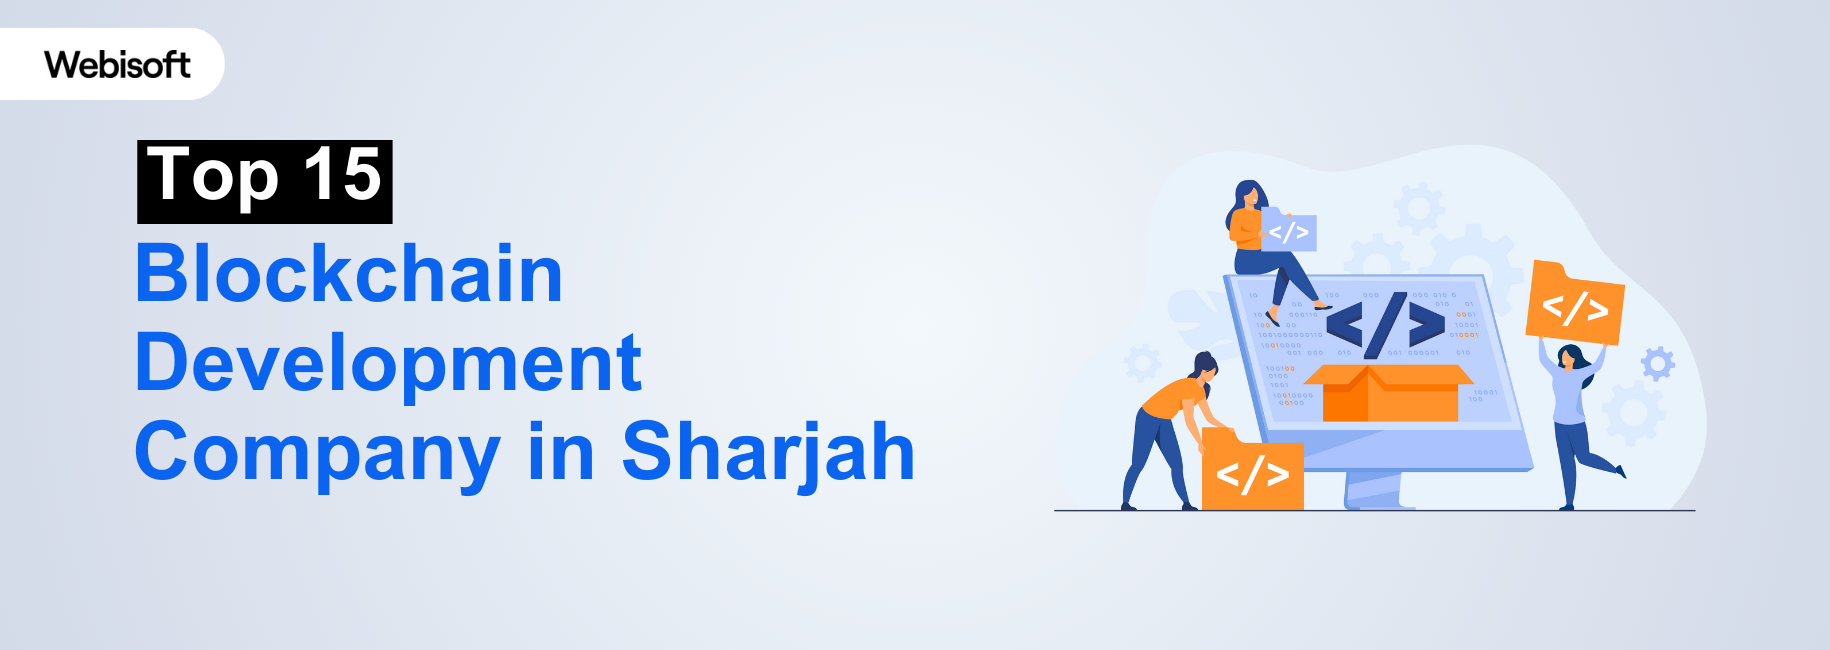 Top 15 Blockchain Development Company in Sharjah for Innovative Blockchain Solutions